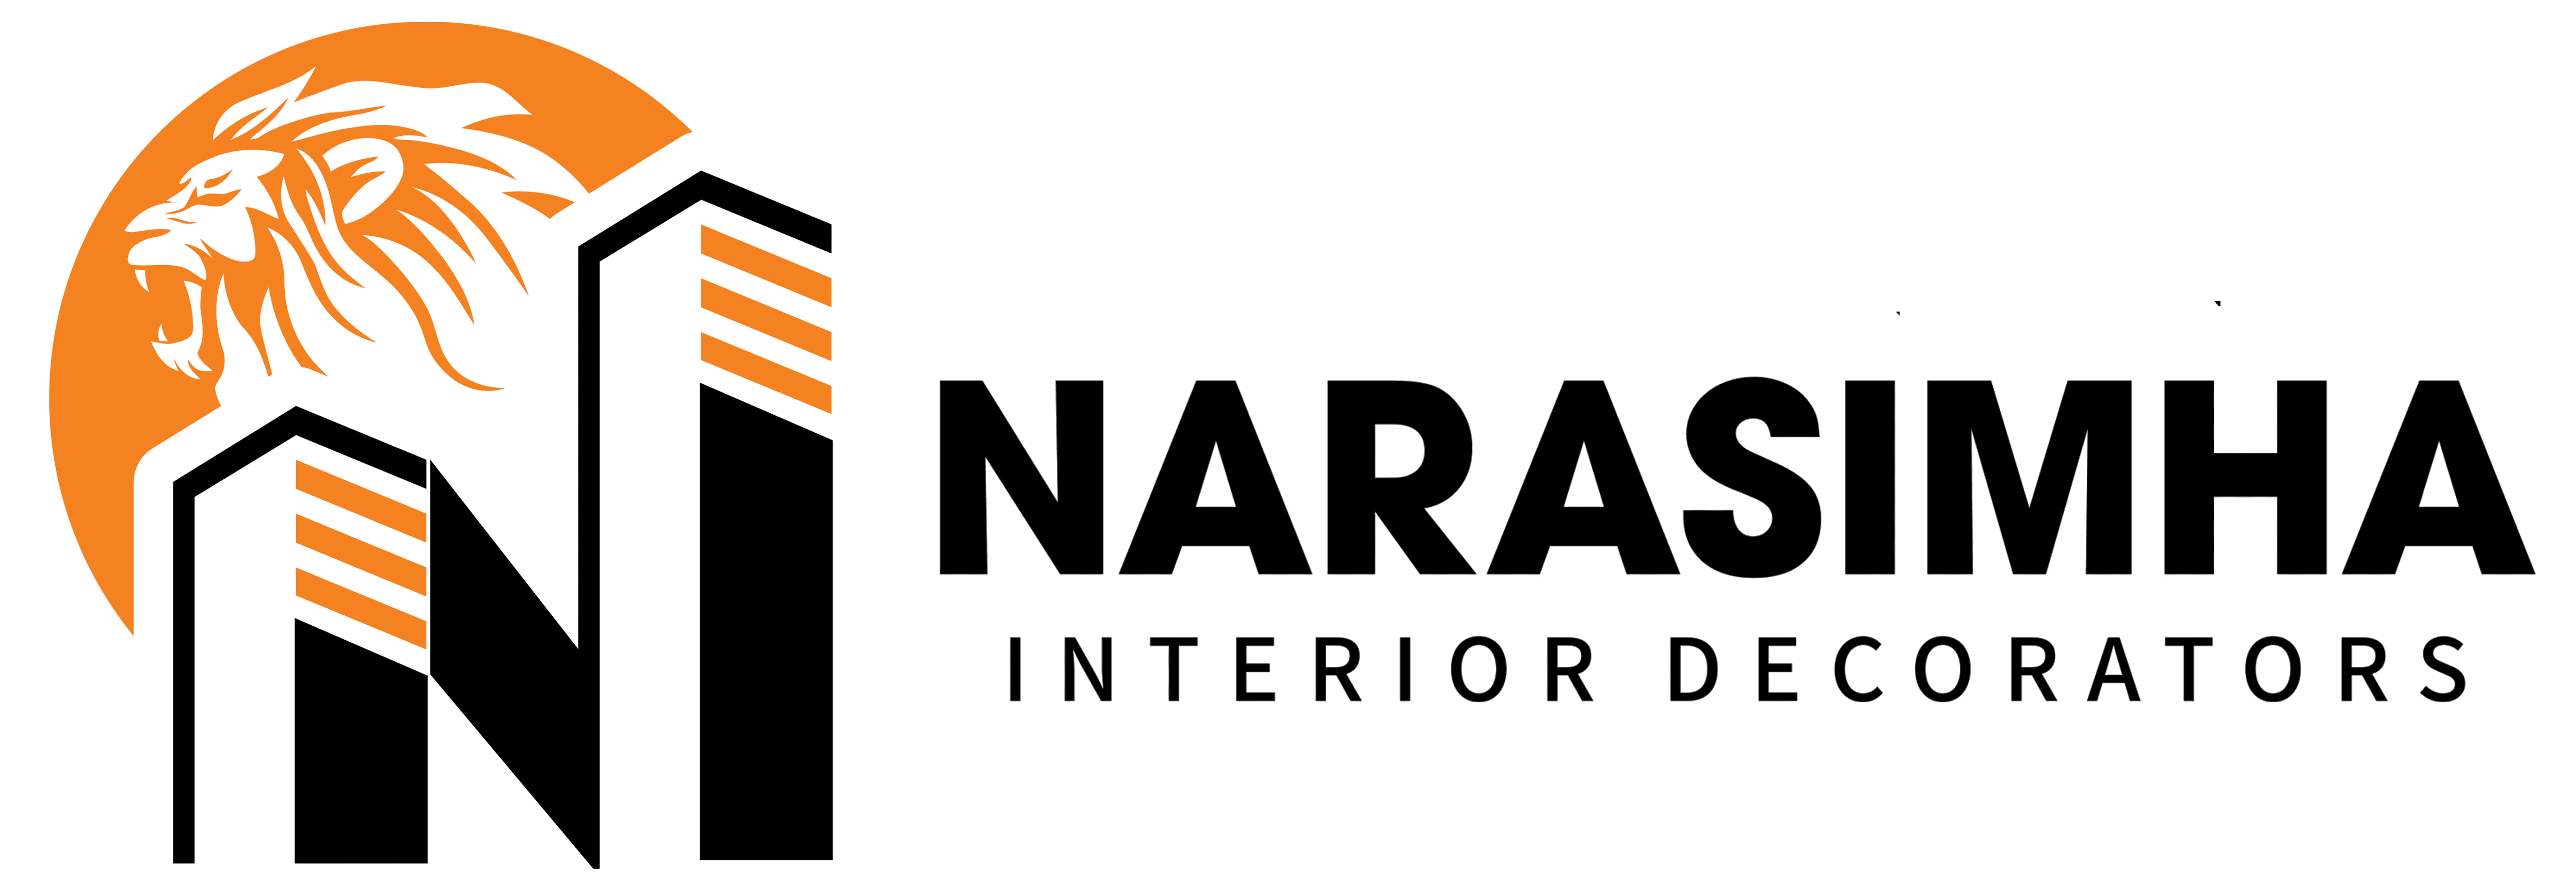 Narasimha Interior Decorators The best interior Decorators in Madipakkam, medavakkam, nanganallur, keel kattalai, velachery